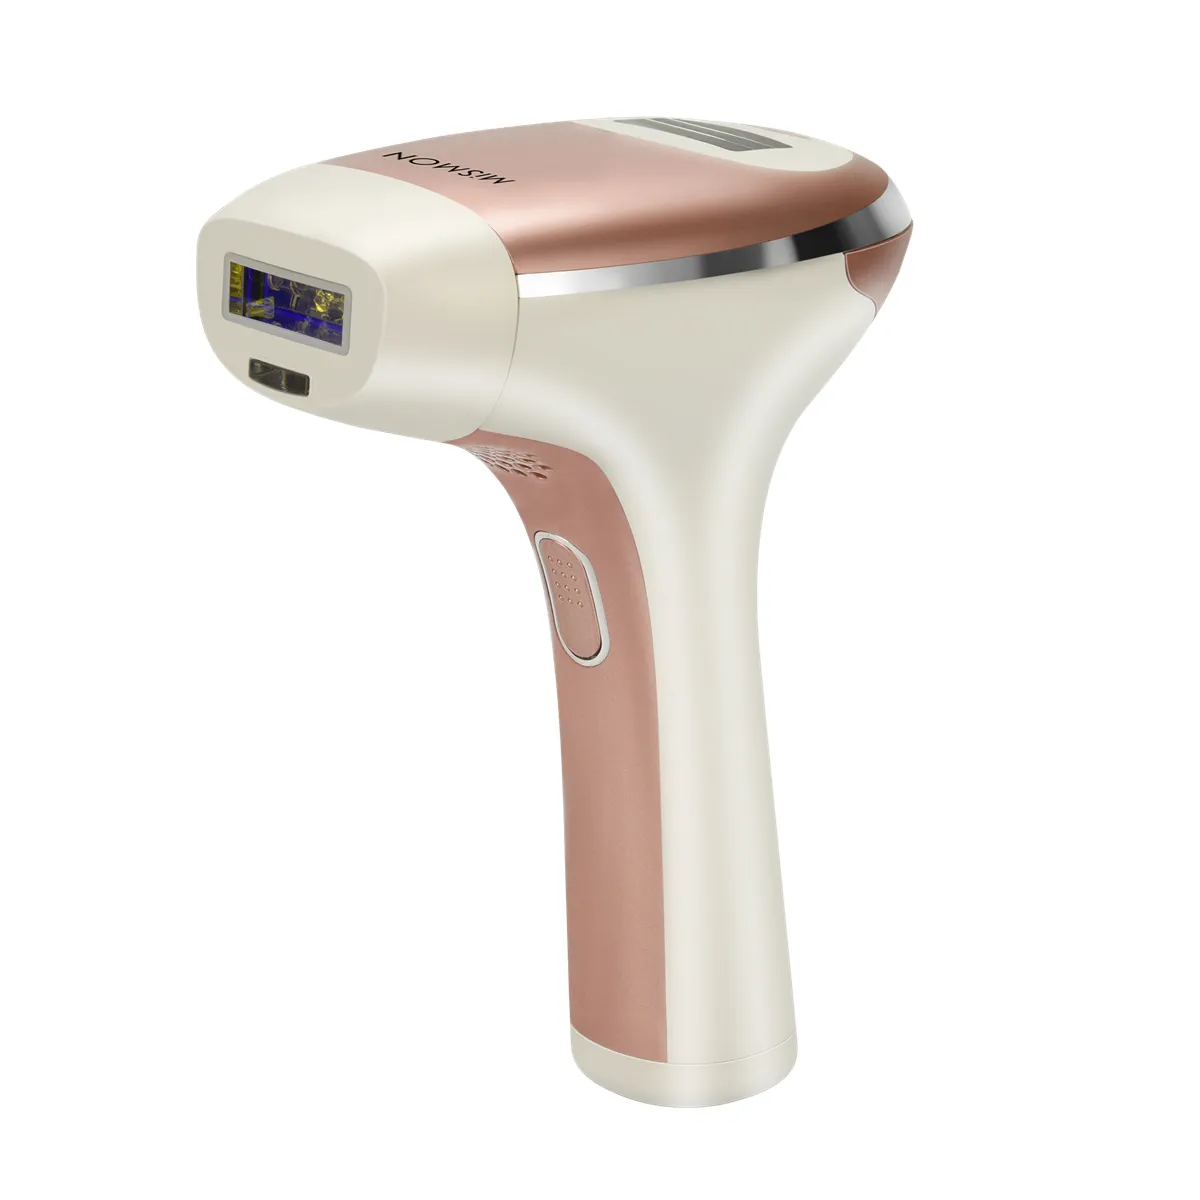 MISMON MELSYA Smart Skin Color Detection IPL Hair Removal Equipment 510k CE UKCA FCC ROHS Patent